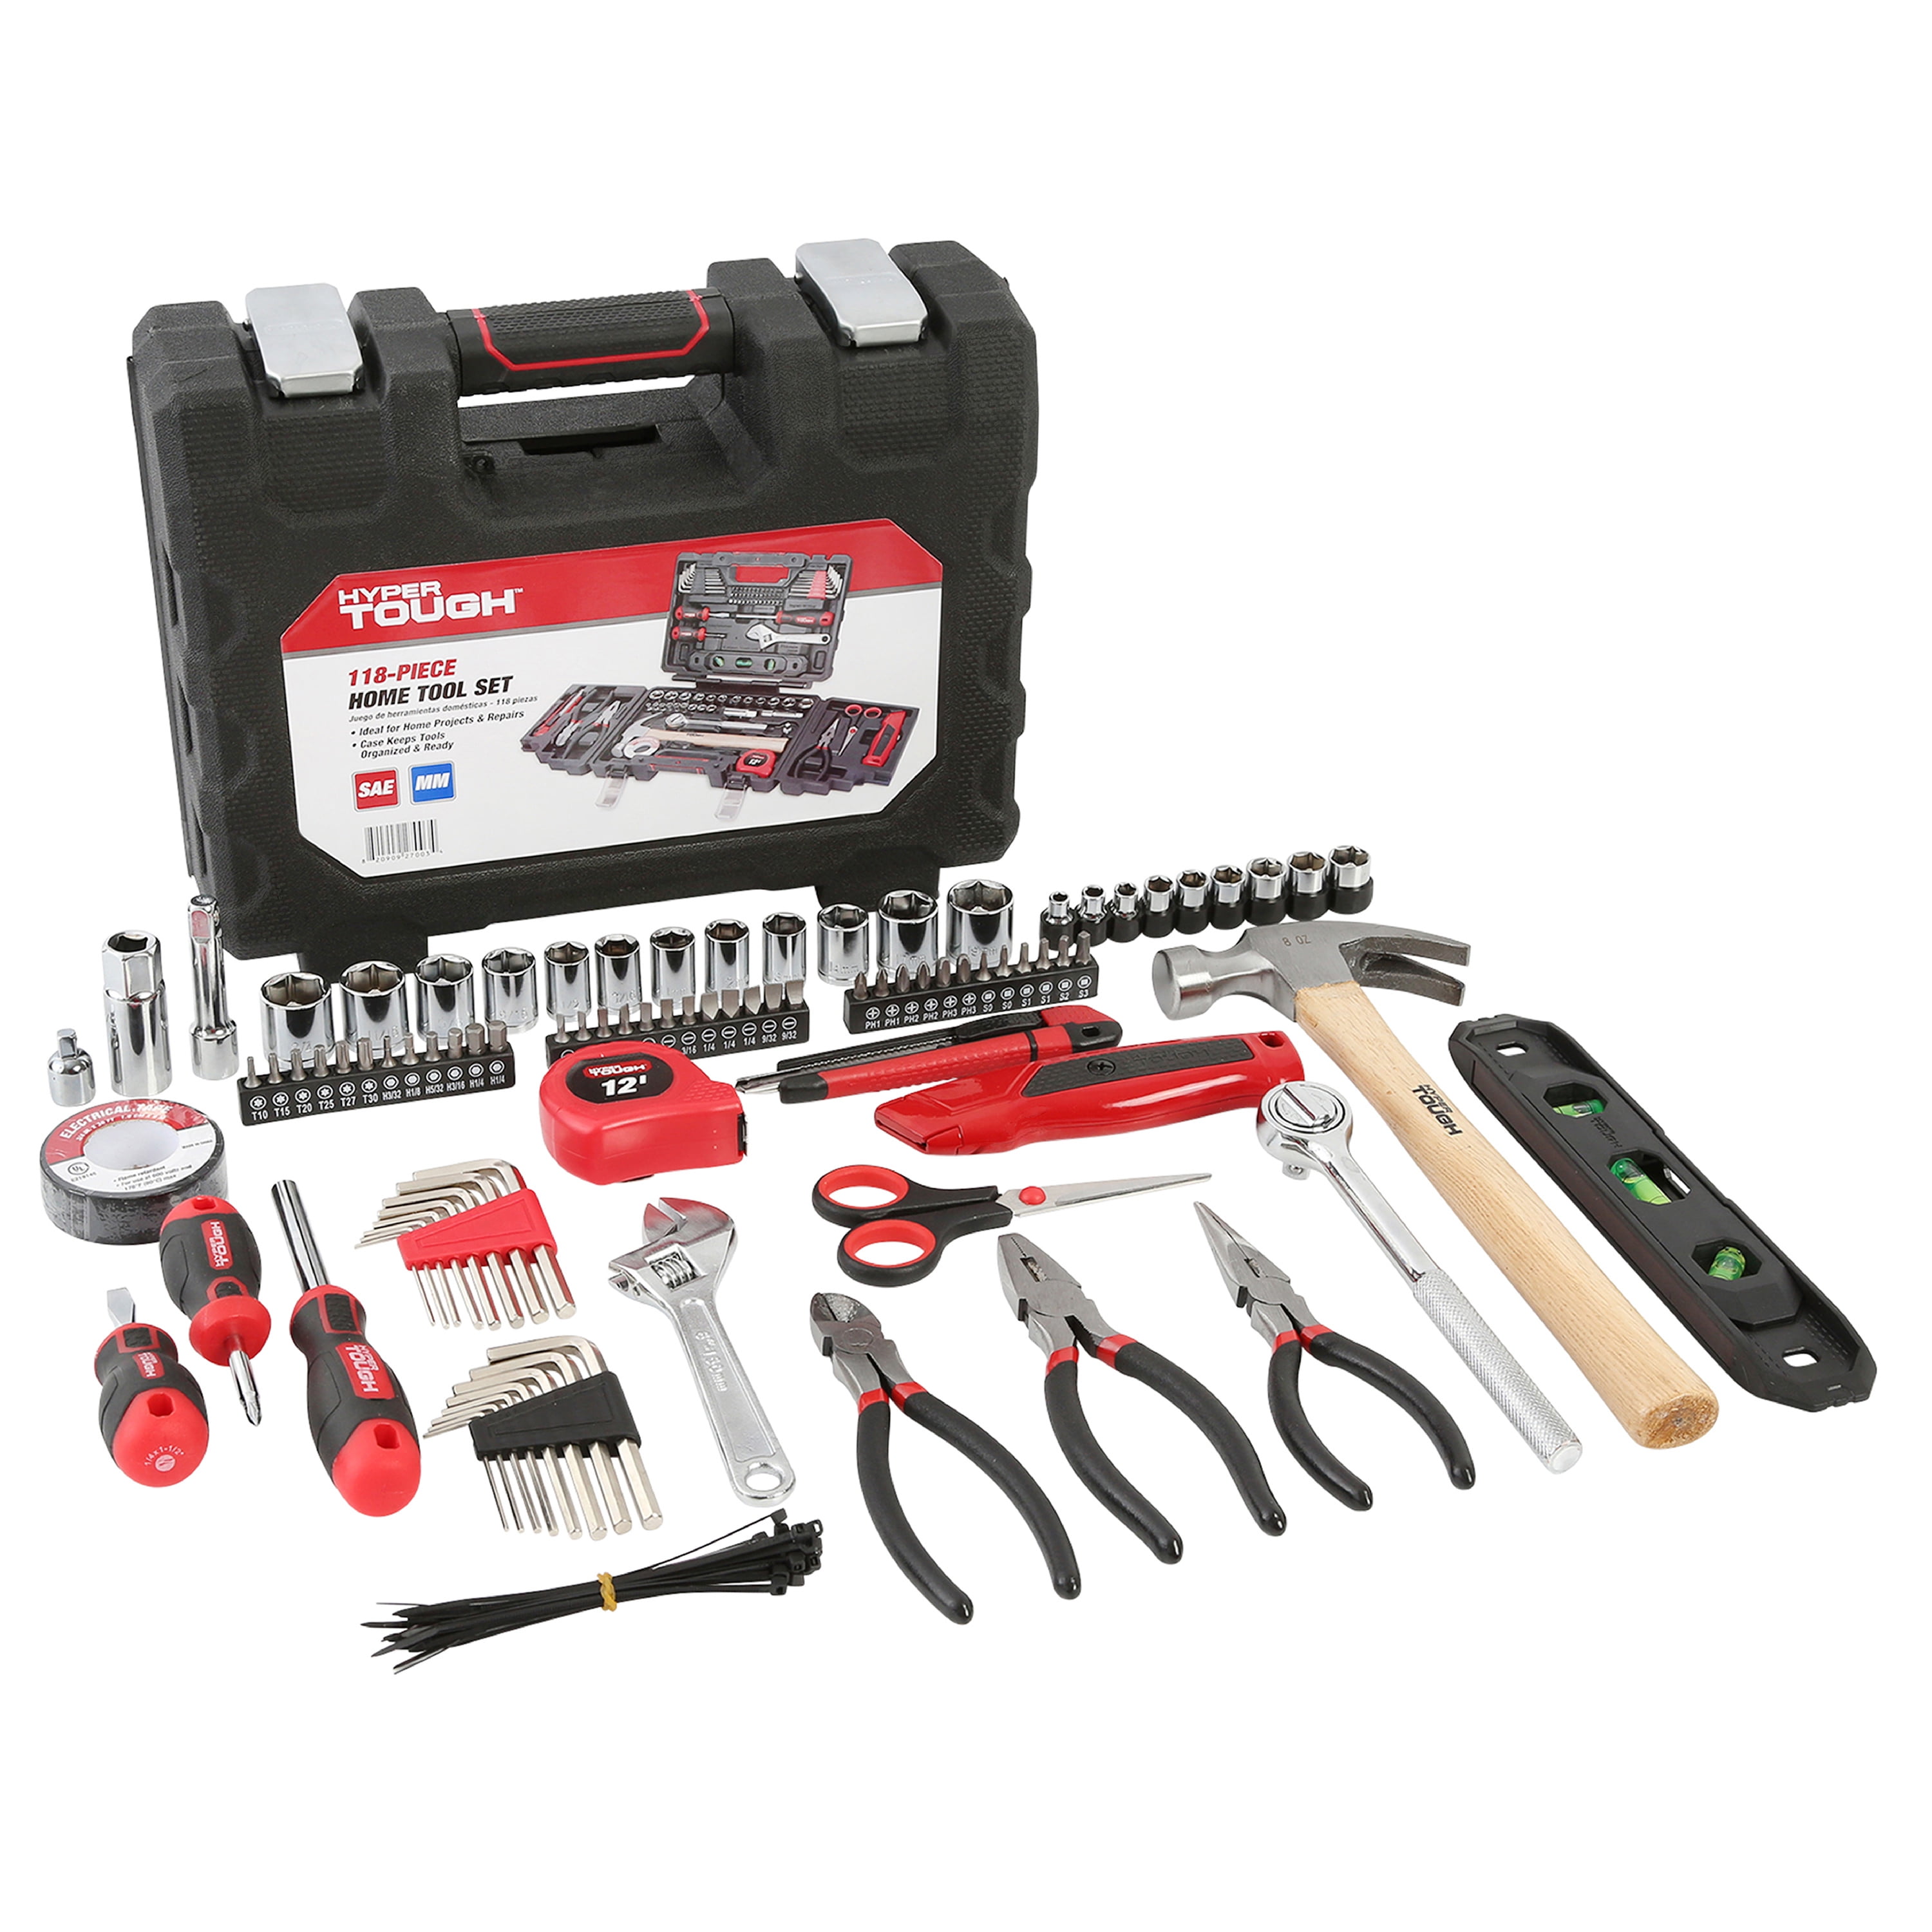 Hi-Spec 67 Piece Auto Mechanics Tool Kit Set with Metric sockets. Car, Bike & Vehicle DIY Hand Tools for Repair & Maintenance. C